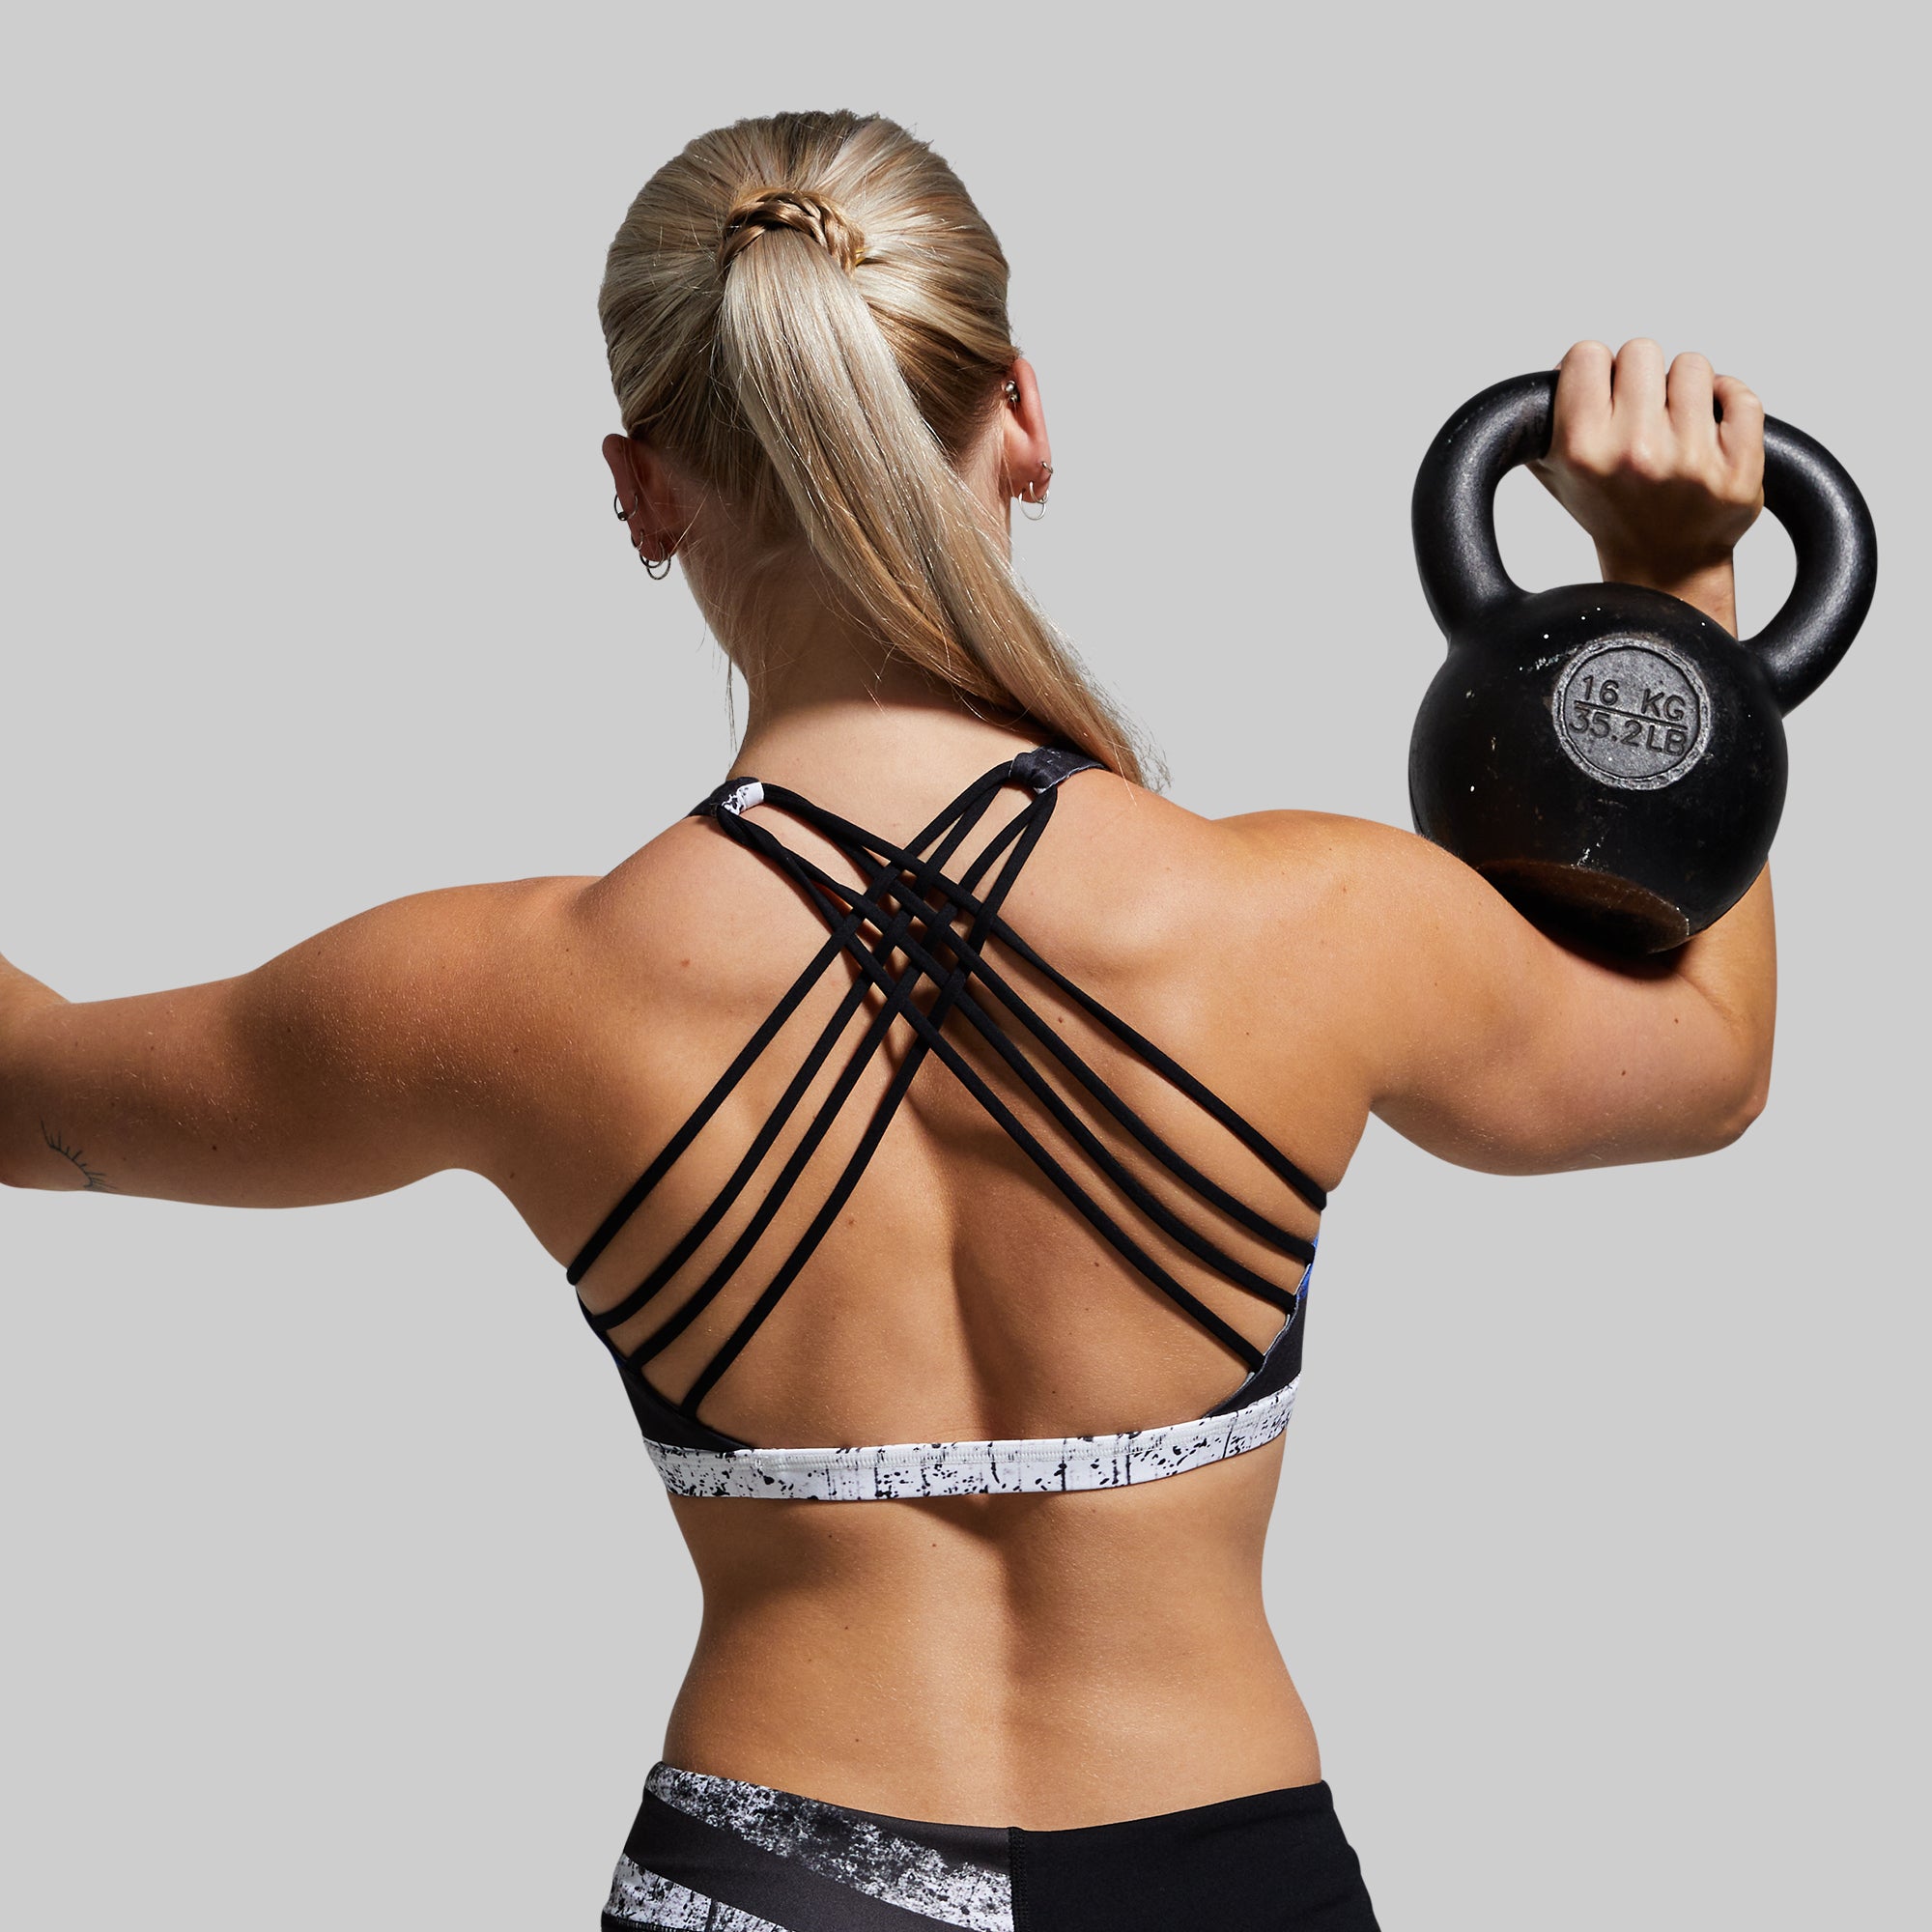 J.Mannequin - Reebok CrossFit bra Size:38 B Kshs:450